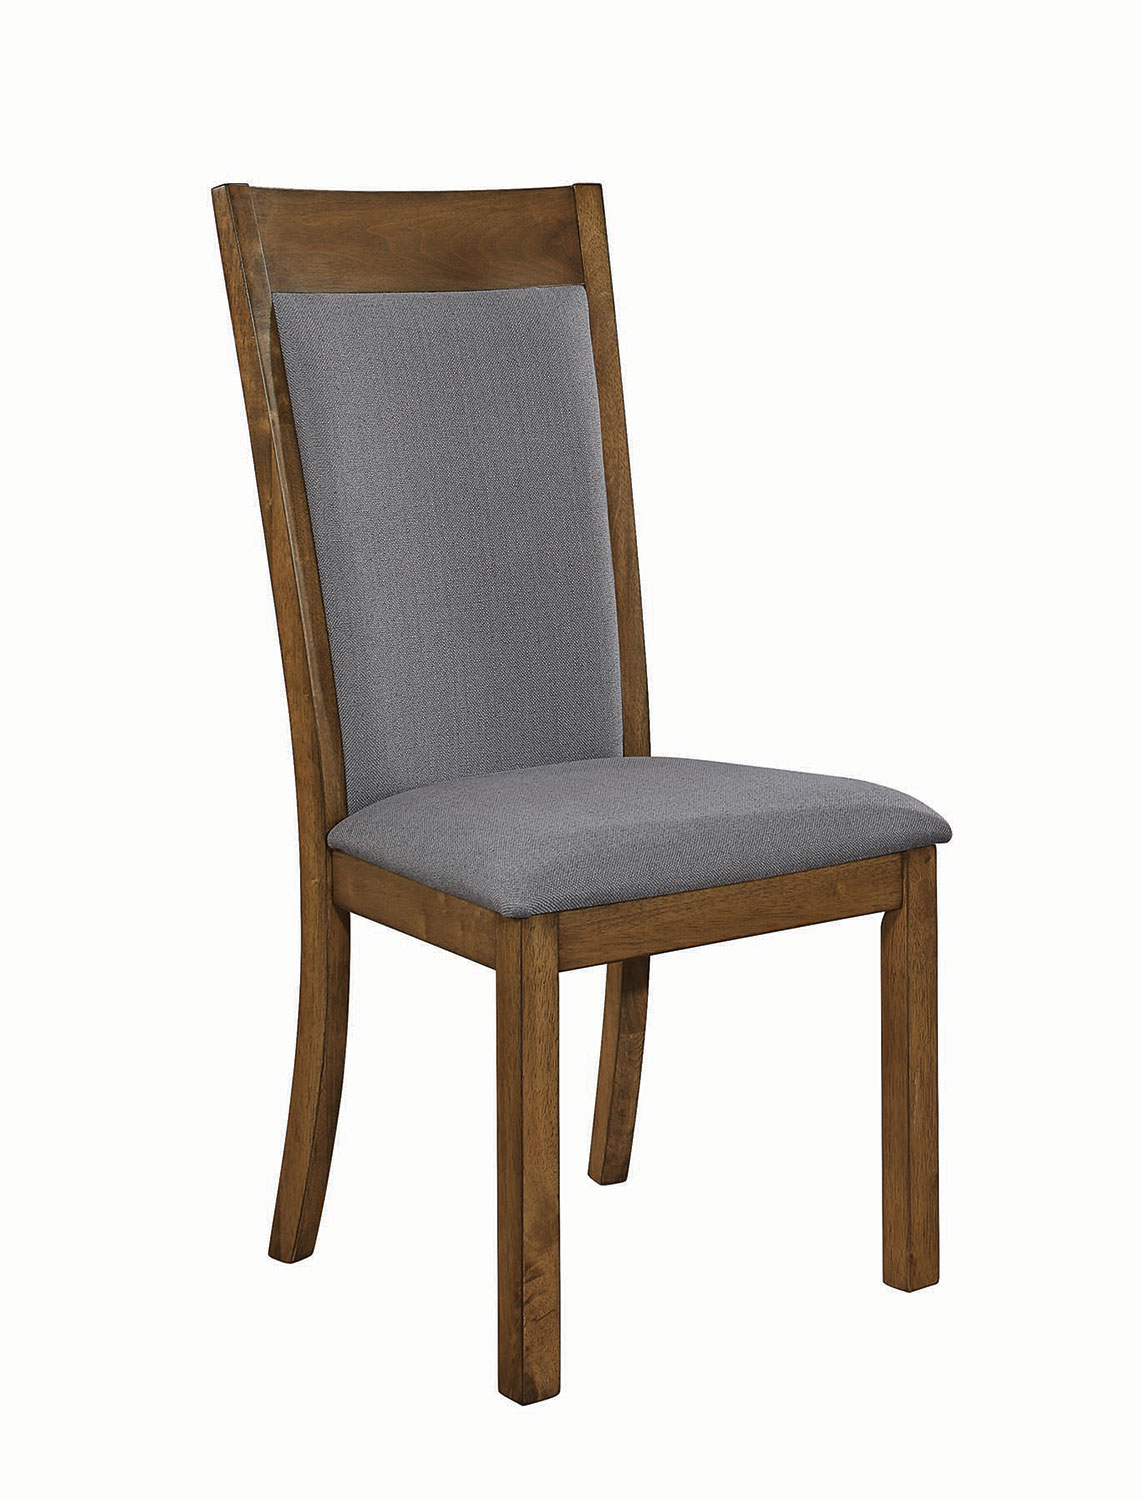 Coaster Octavia Side Chair - Grey Fabric